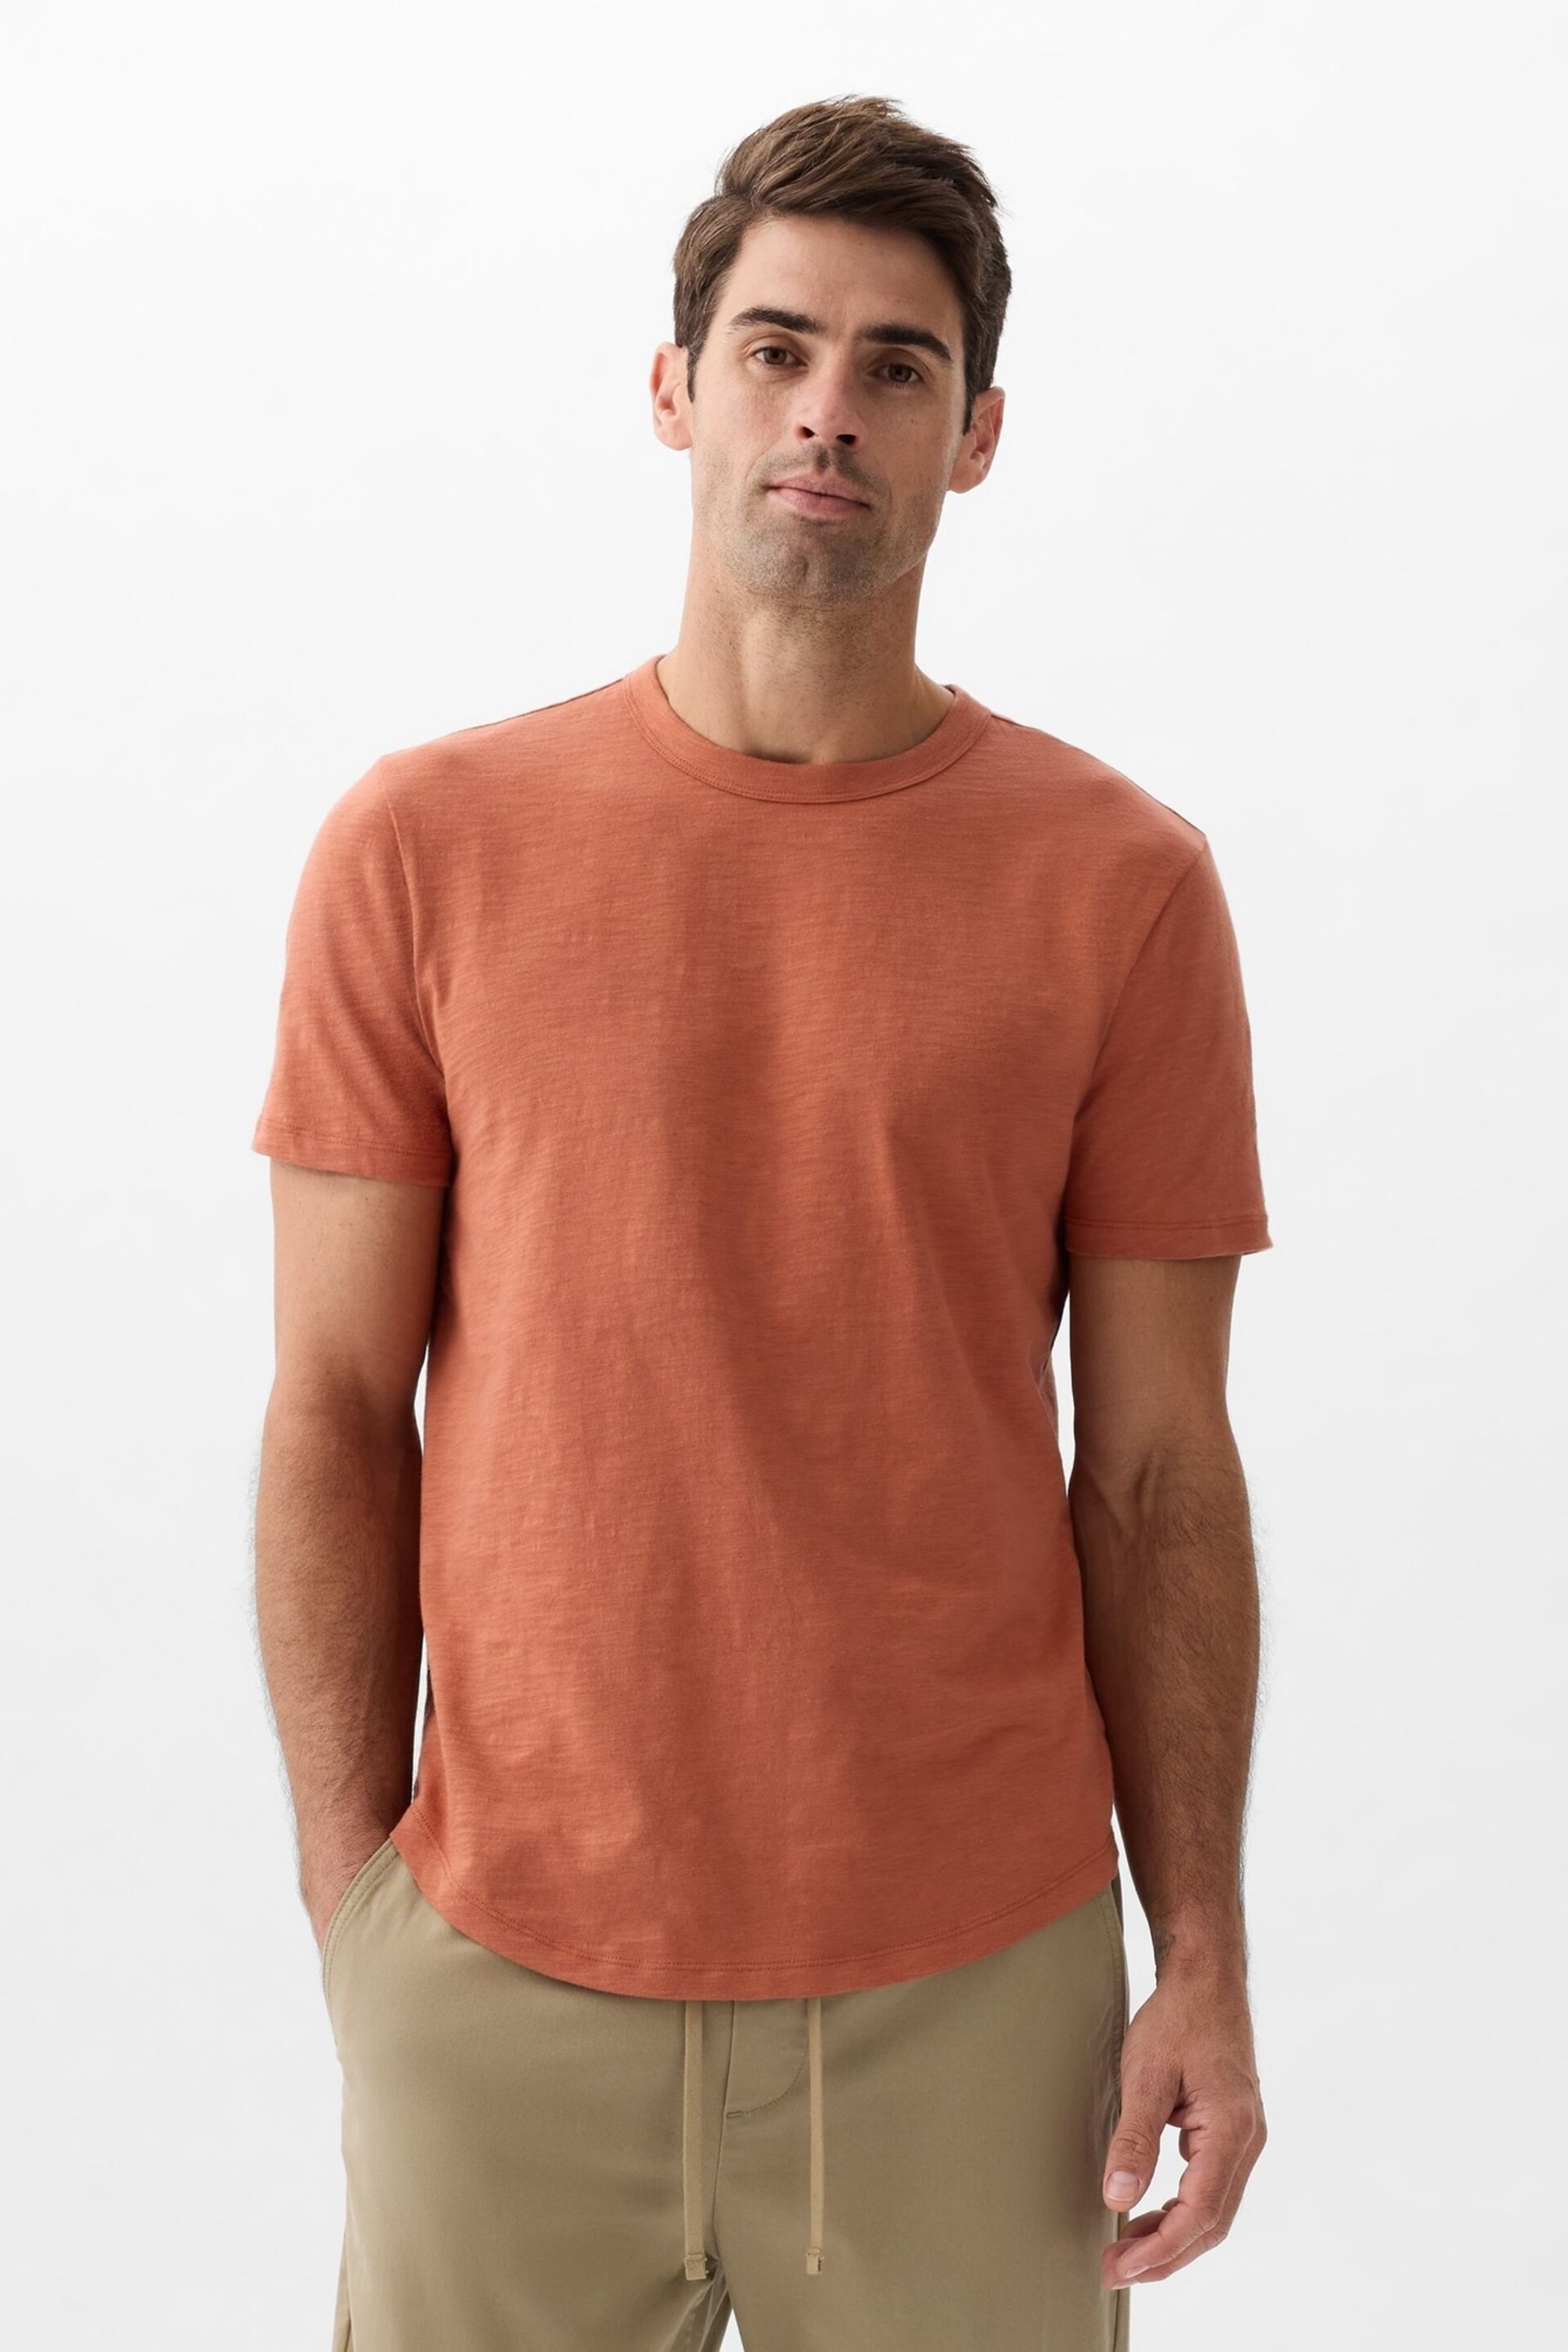 Gap Orange Cotton Crew Neck Short Sleeve T-Shirt - Image 1 of 1